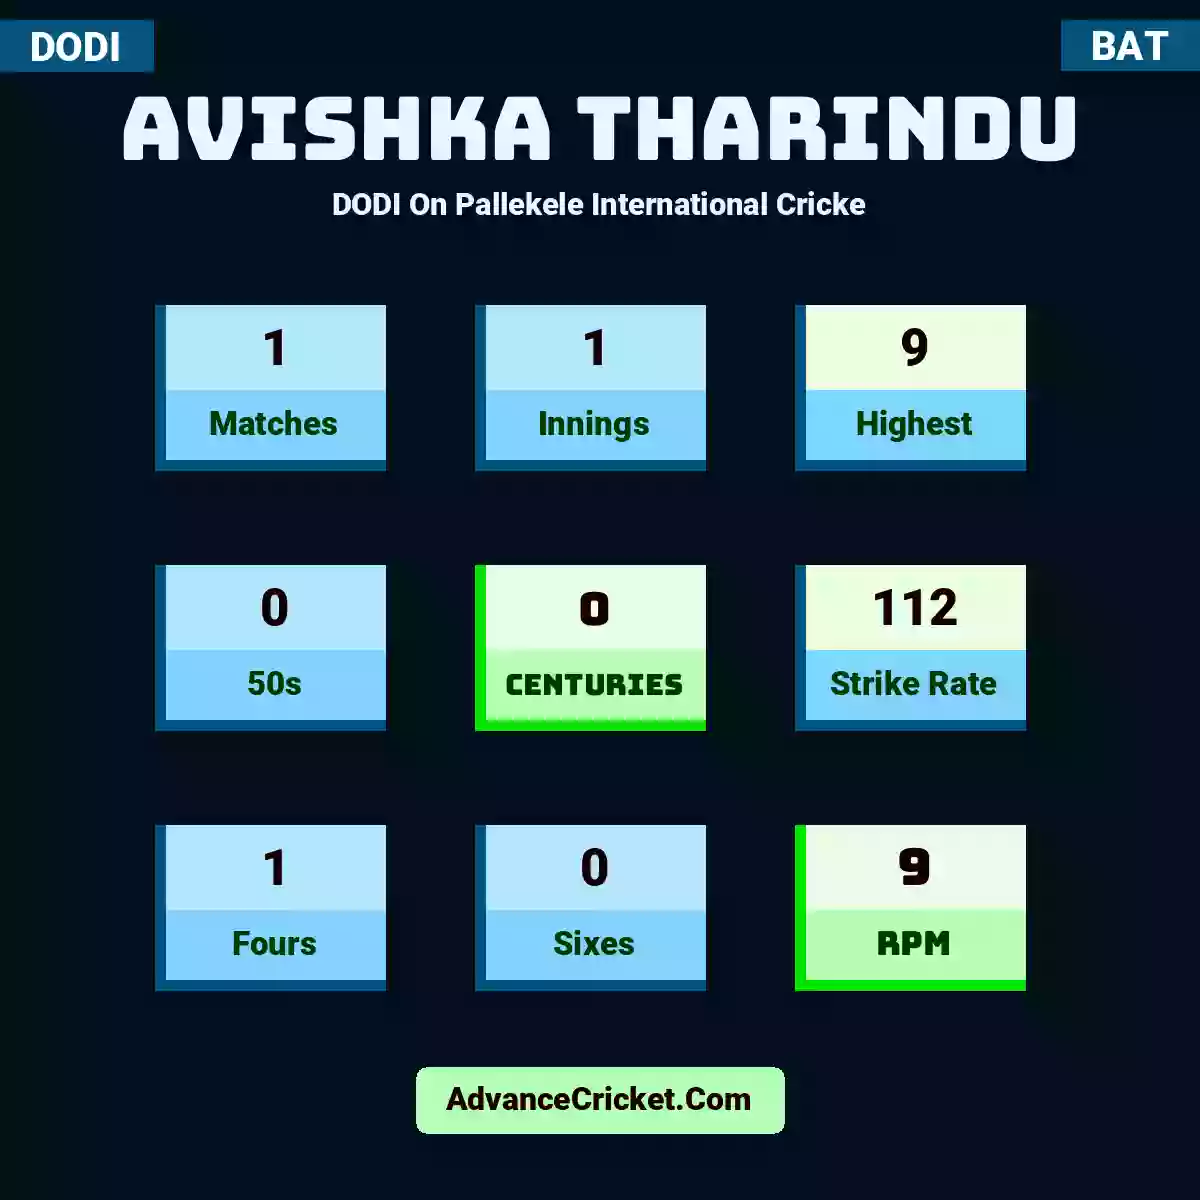 Avishka Tharindu DODI  On Pallekele International Cricke, Avishka Tharindu played 1 matches, scored 9 runs as highest, 0 half-centuries, and 0 centuries, with a strike rate of 112. A.Tharindu hit 1 fours and 0 sixes, with an RPM of 9.